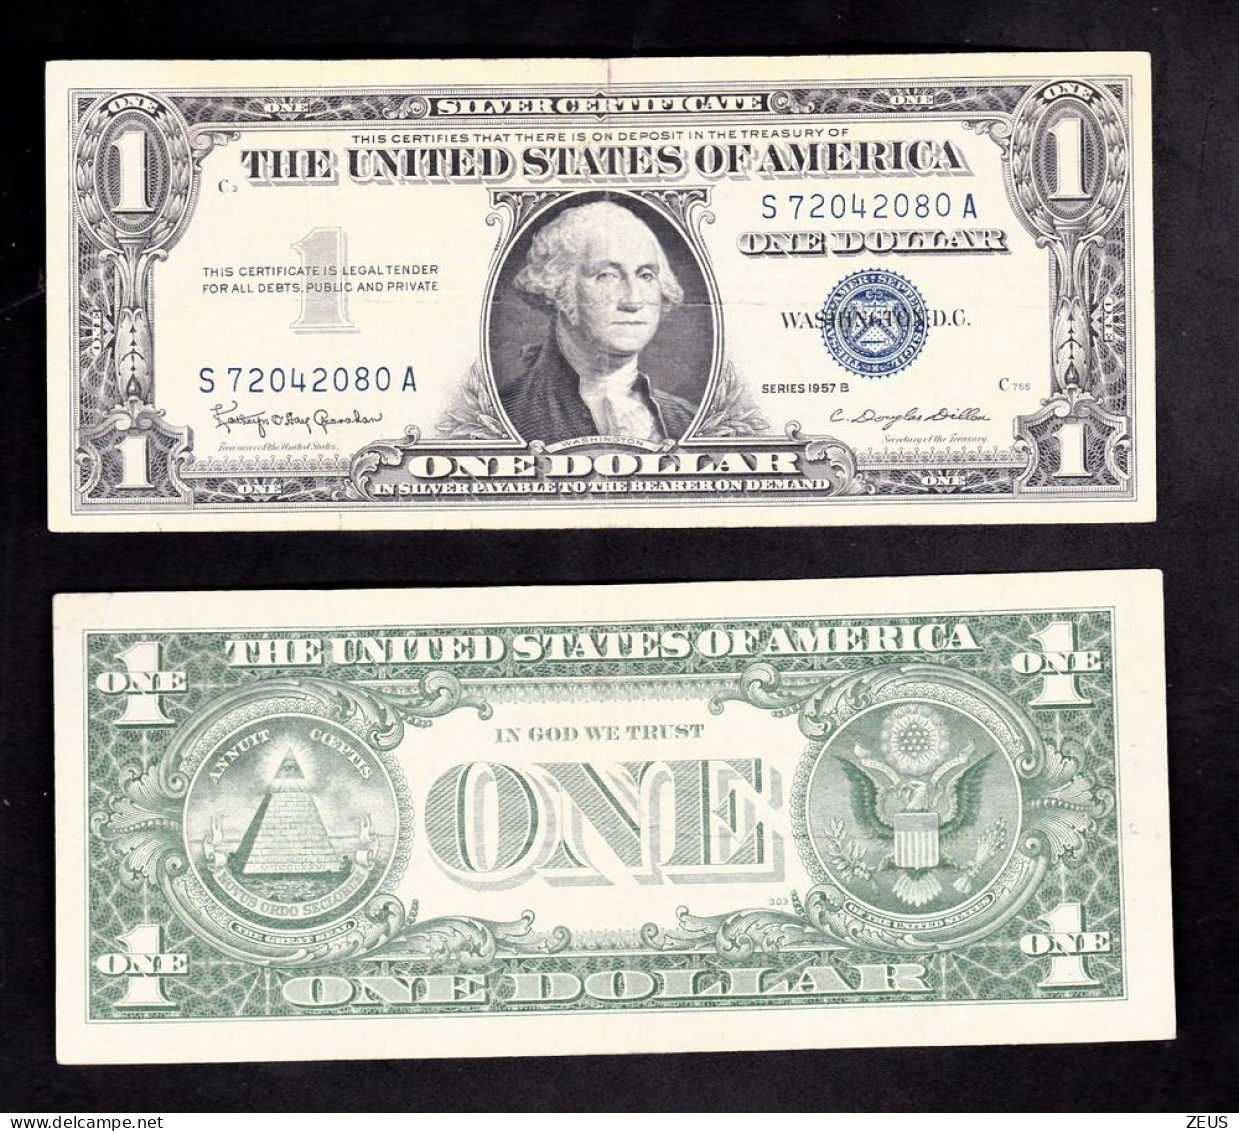 USA 1 DOLLARO 1957  PIK 419B BB - Billets Des États-Unis (1928-1953)